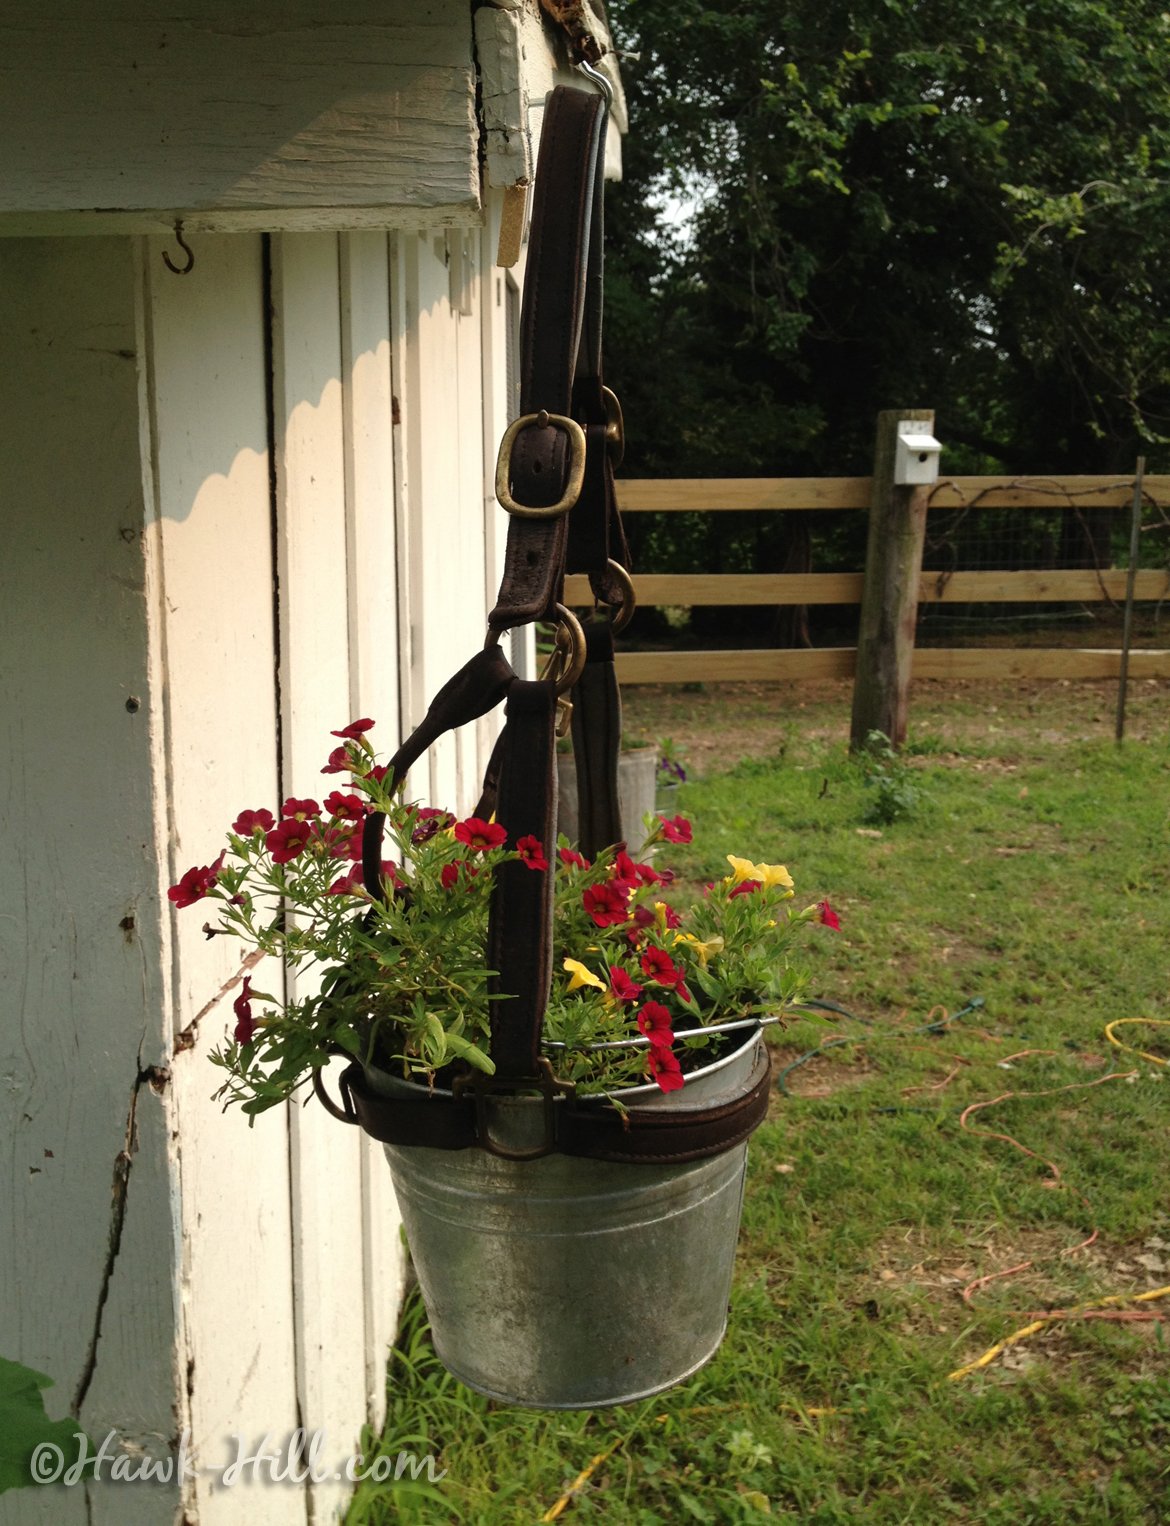 Old Horse Halter & Galvanized Bucket used as Hanging Planter - Hawk-Hill.com